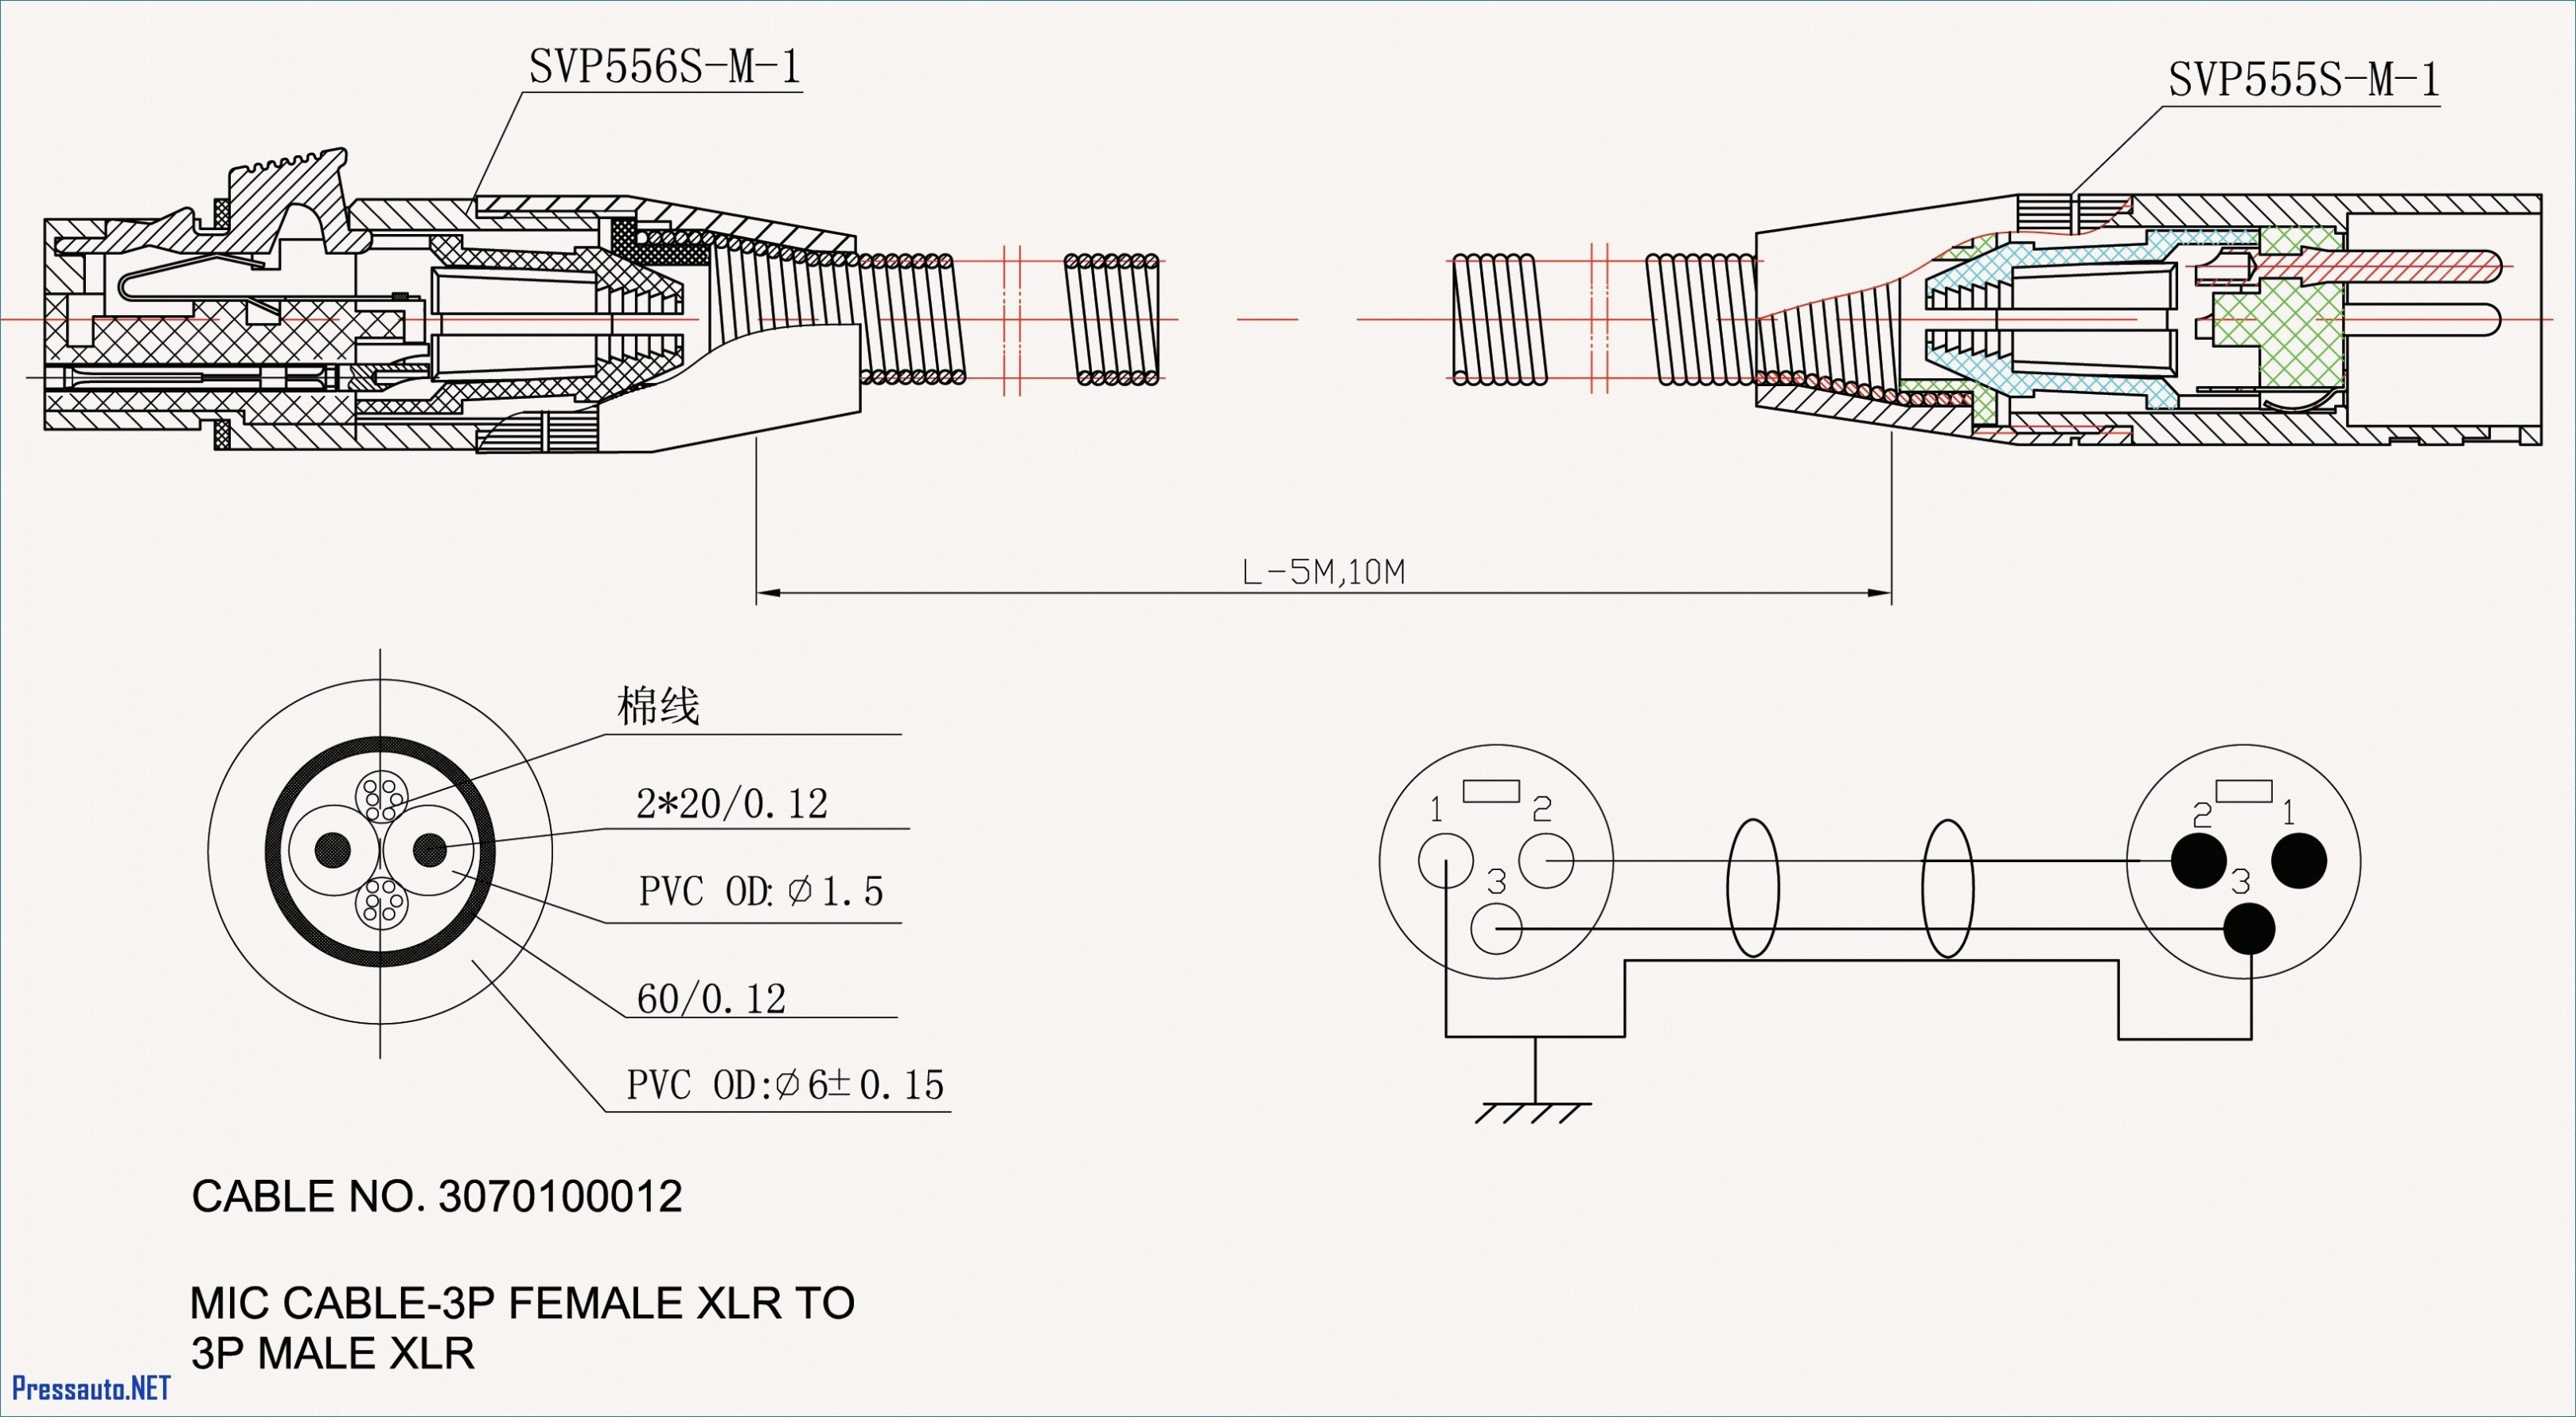 Car Subwoofer Circuit Diagram Vehicle Wiring Diagrams V4 2 Wiring Diagram toolbox Of Car Subwoofer Circuit Diagram